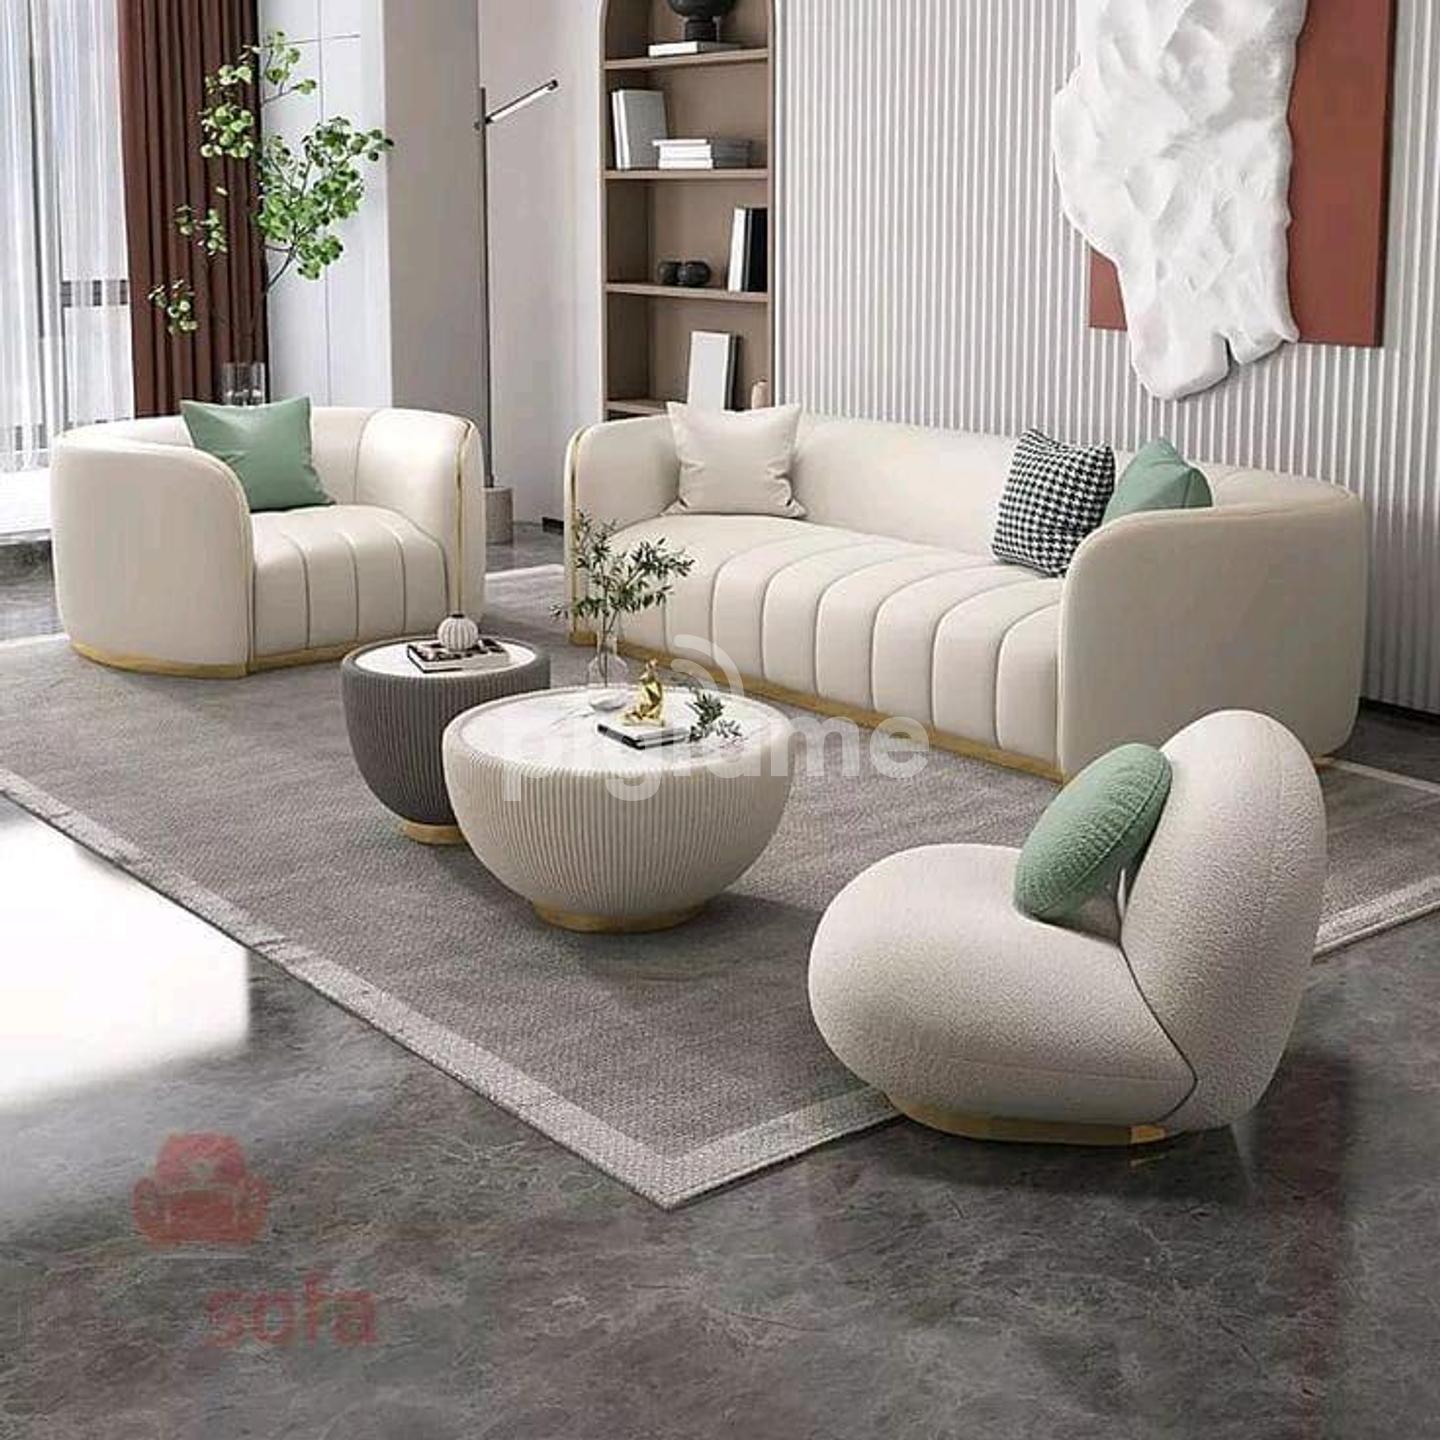 3 1 Latest Sofa Design In Utawala Mihango Pigiame